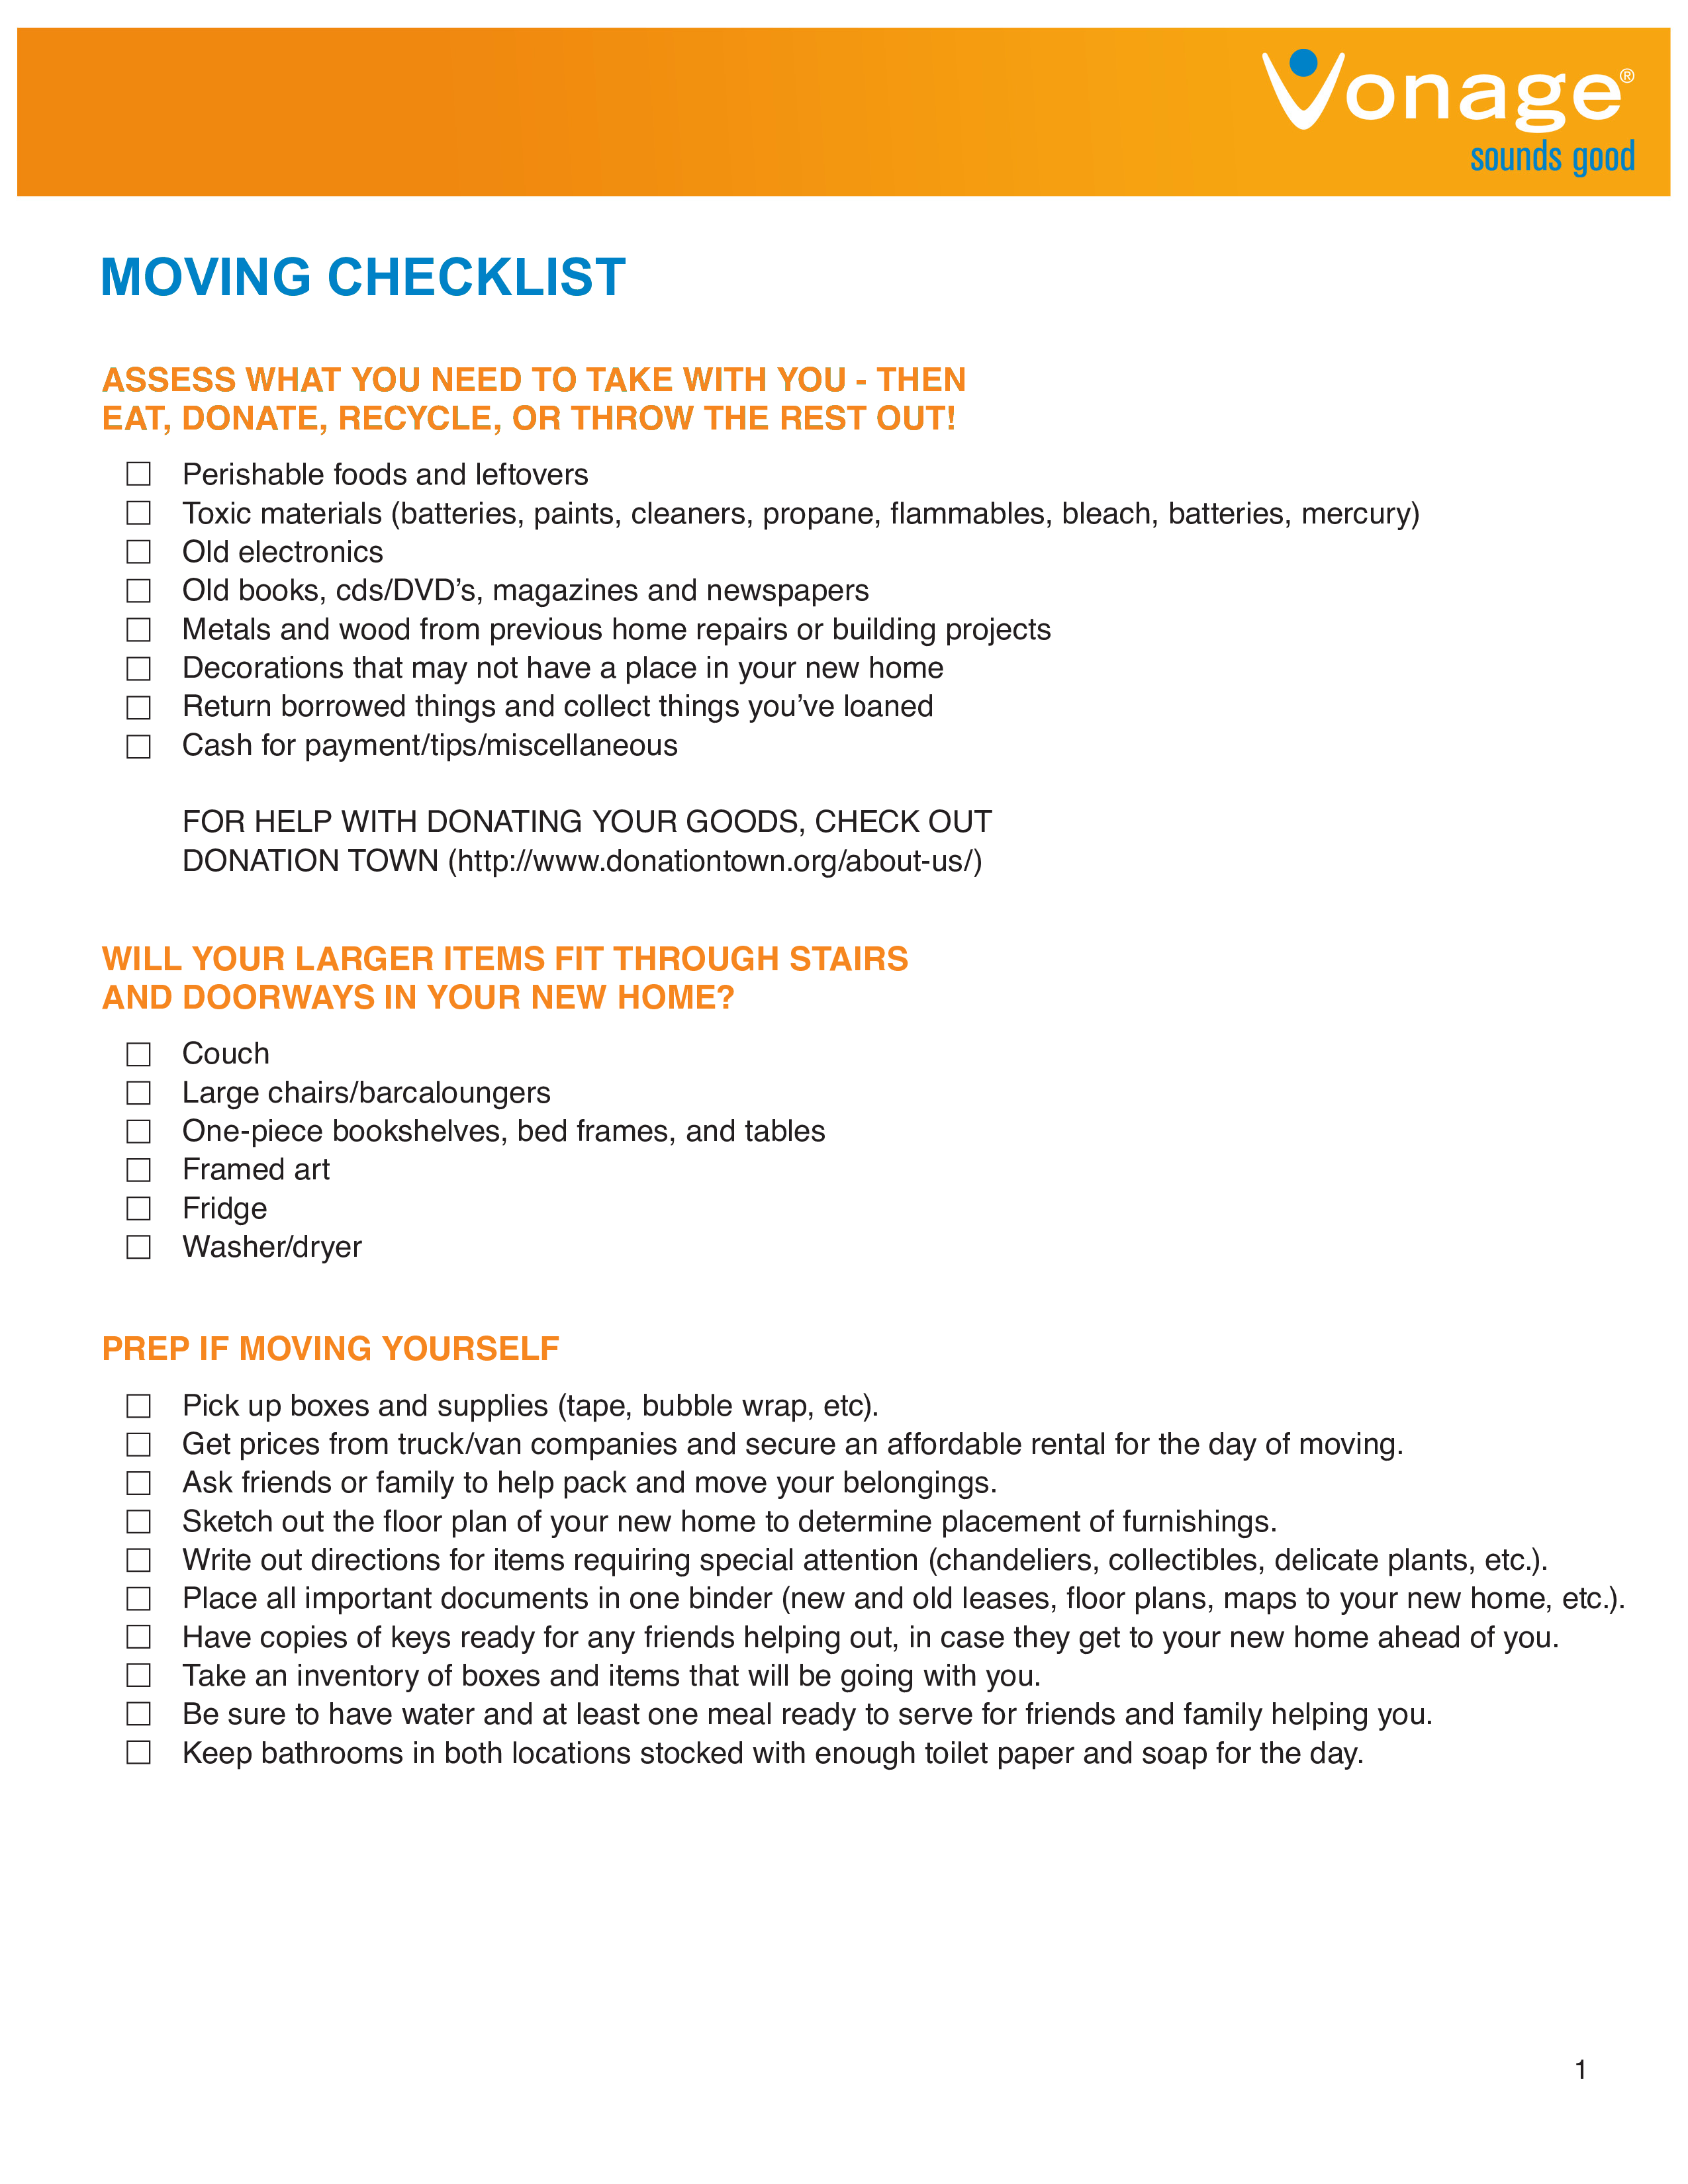 Moving Checklist main image